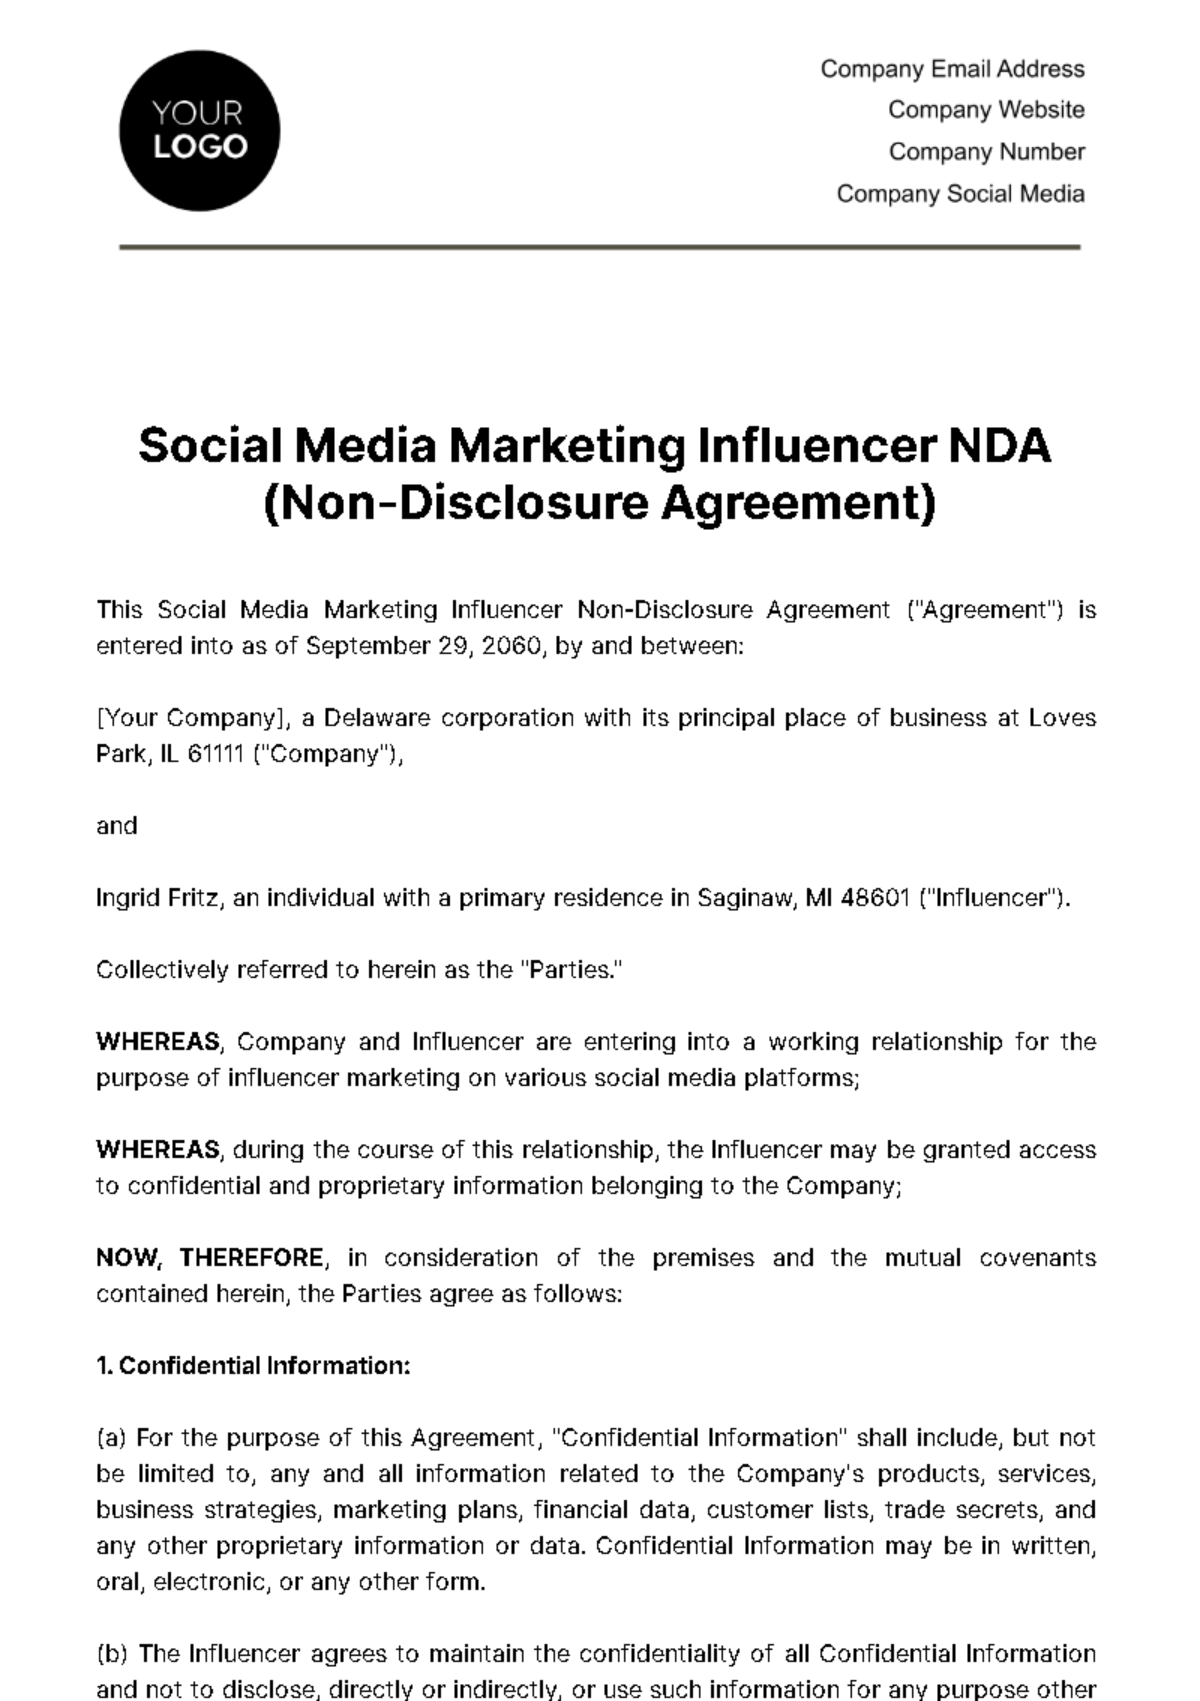 Social Media Marketing Influencer NDA Template